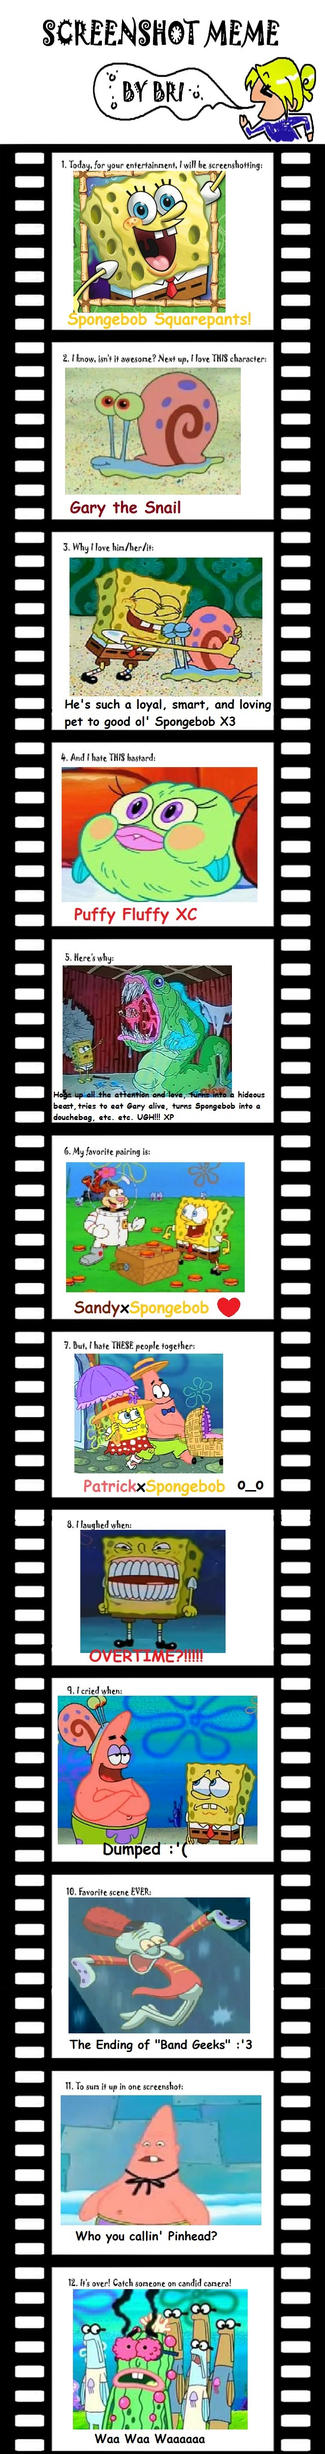 Spongebob Squarepants Screenshot Meme By PurfectPrincessGirl On